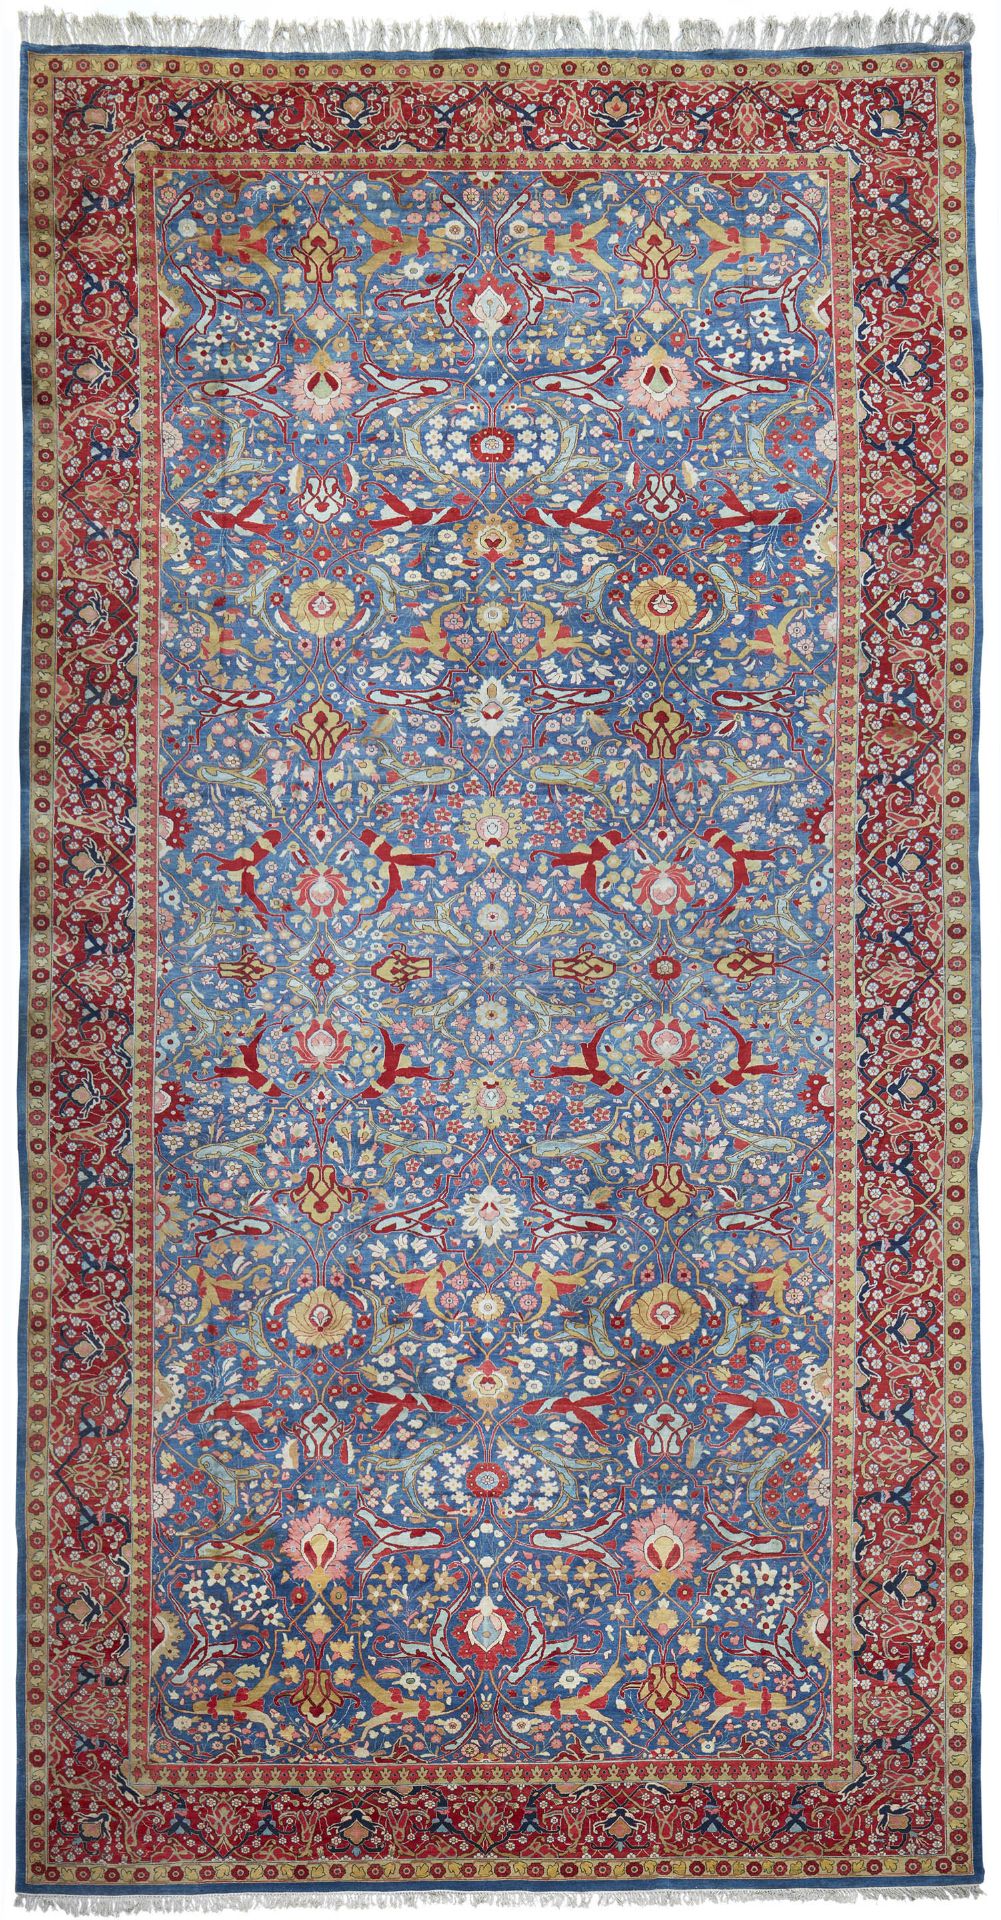 The Cologne City Hall Carpets, An Iranian carpet